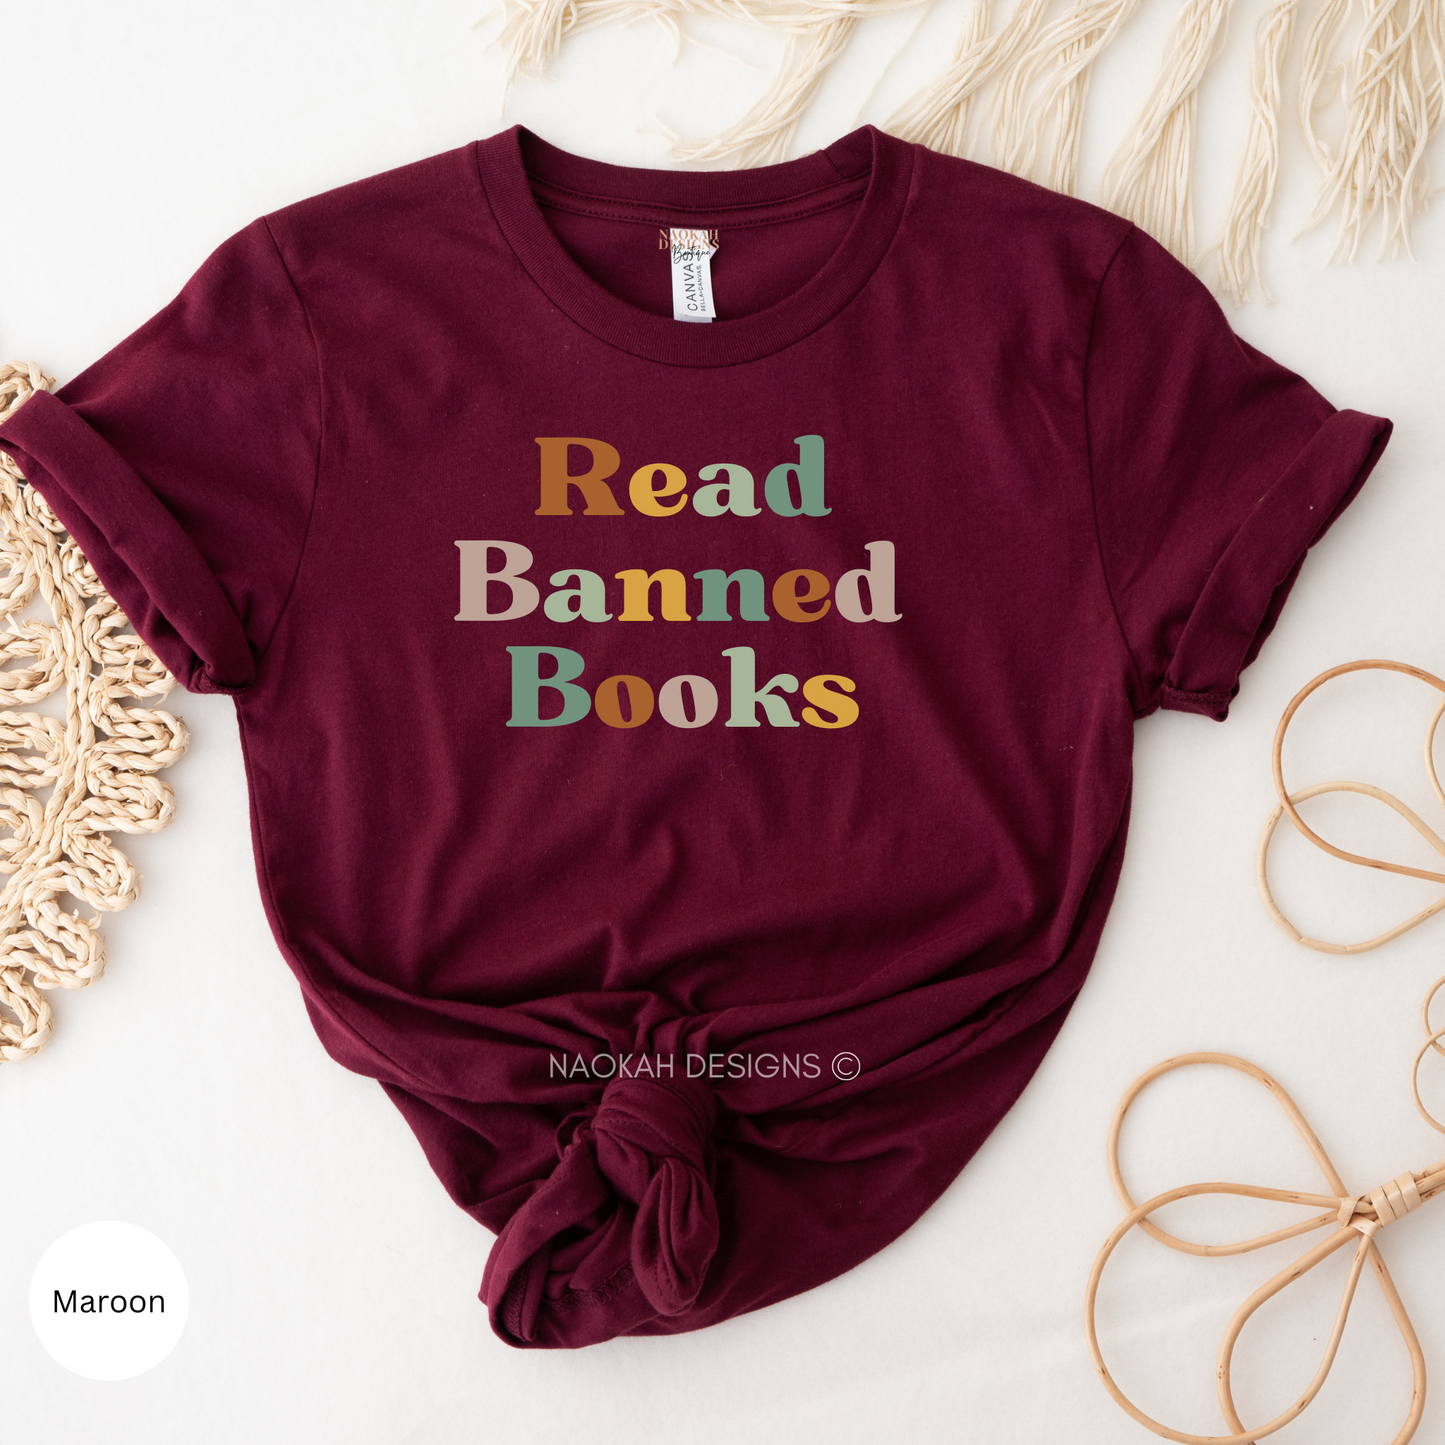 read banned books shirt, librarian shirt, book club shirt, bookish shirt, try reading book instead of banning them, literature shirt